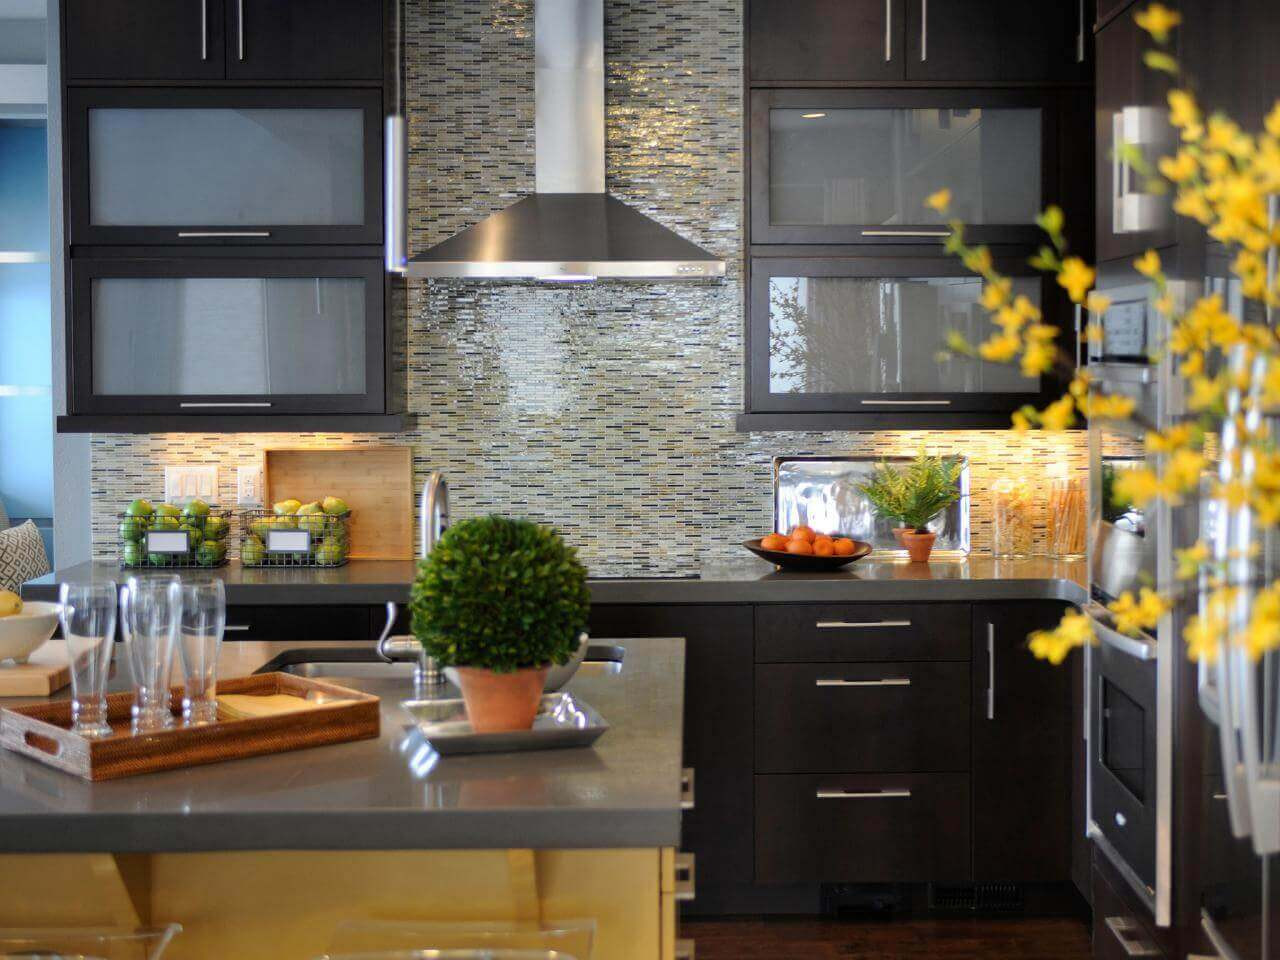 Backsplash Panels For Kitchen
 78 Great Looking Modern Kitchen Gallery